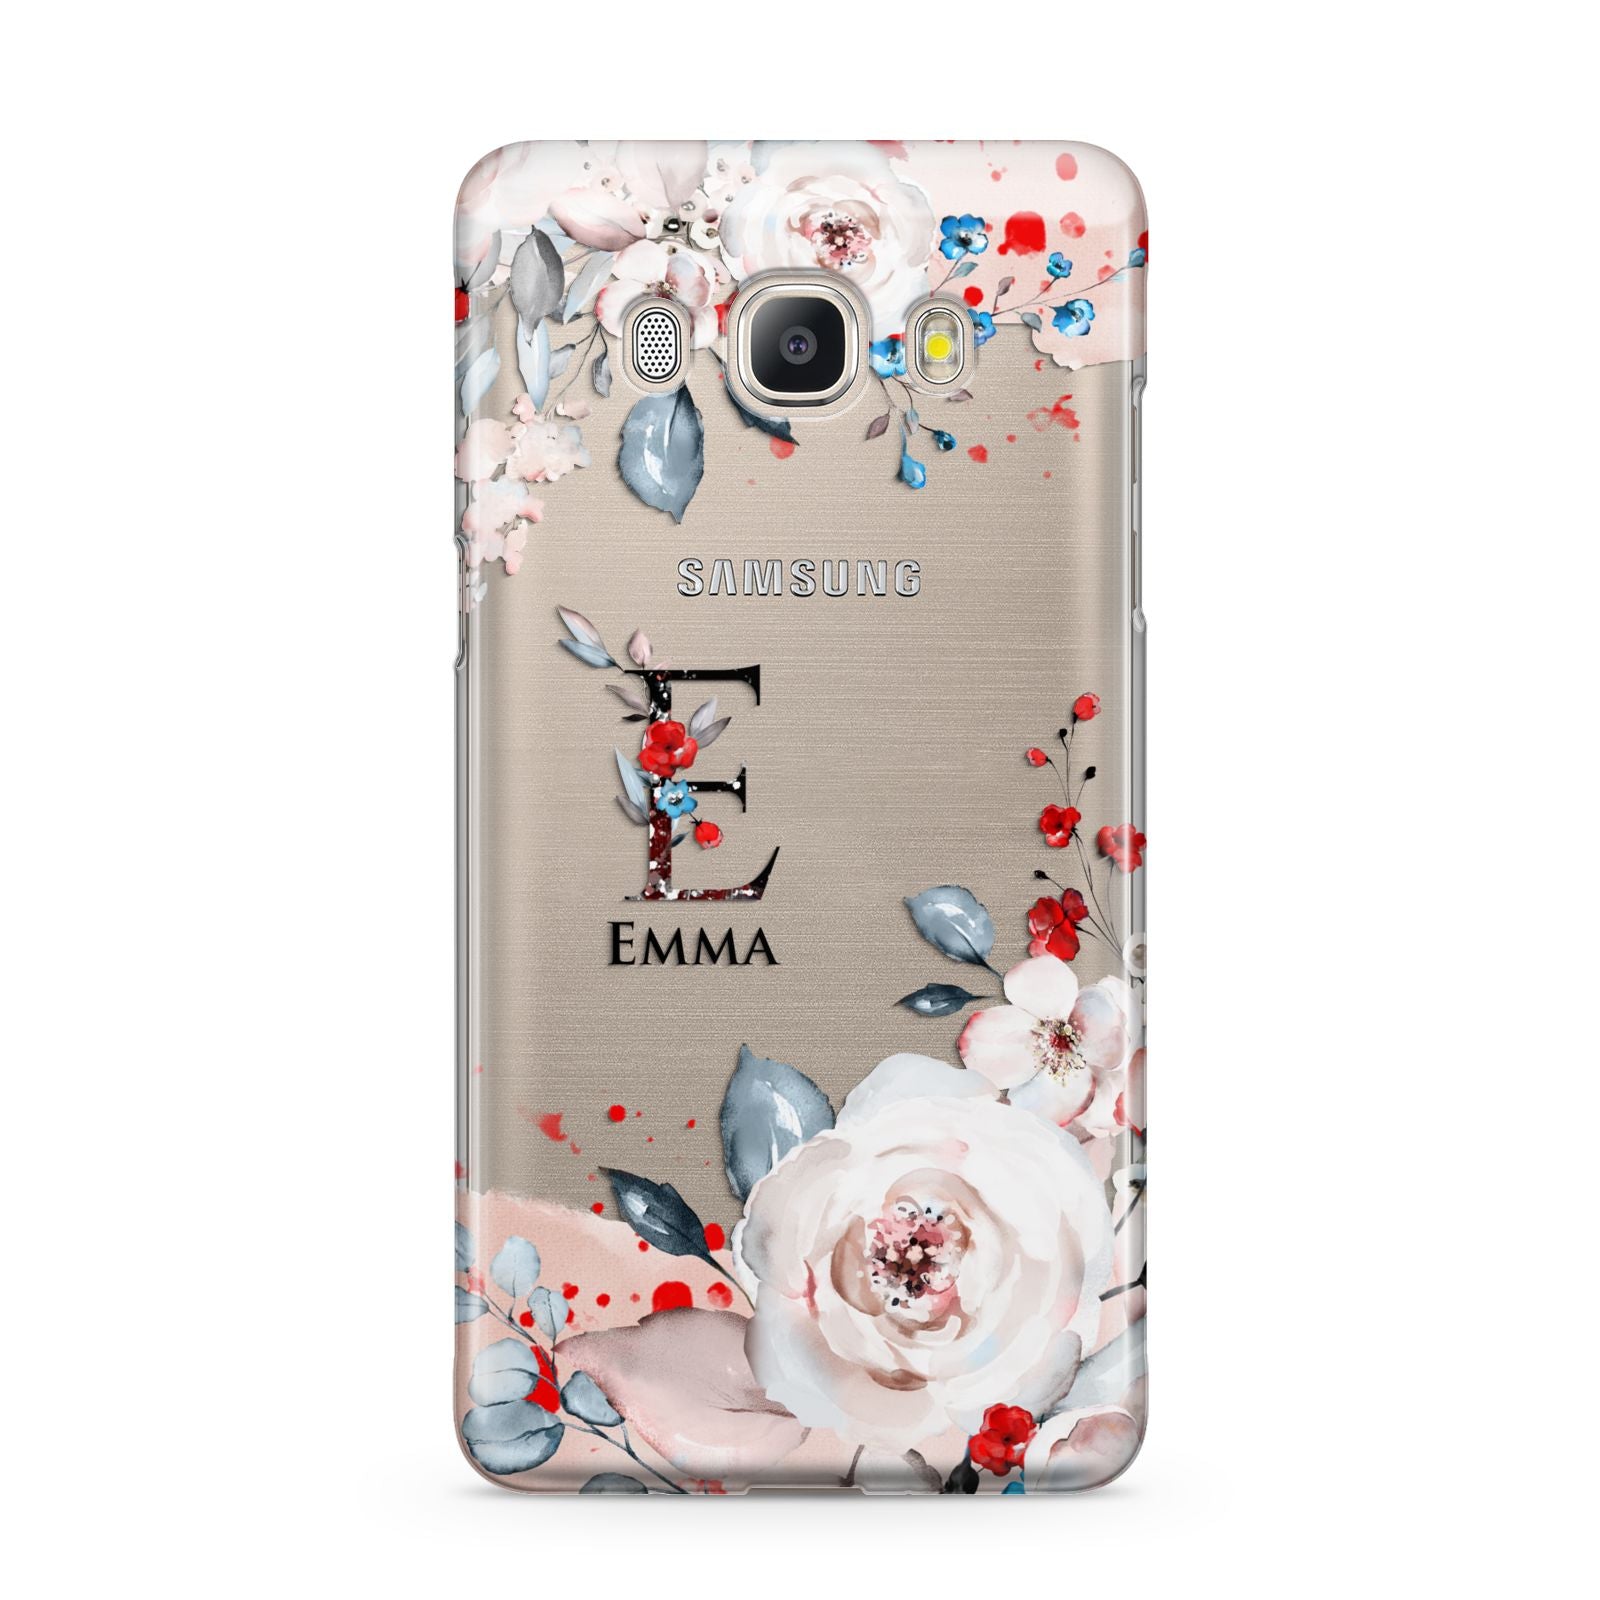 Monogrammed Roses Floral Wreath Samsung Galaxy J5 2016 Case